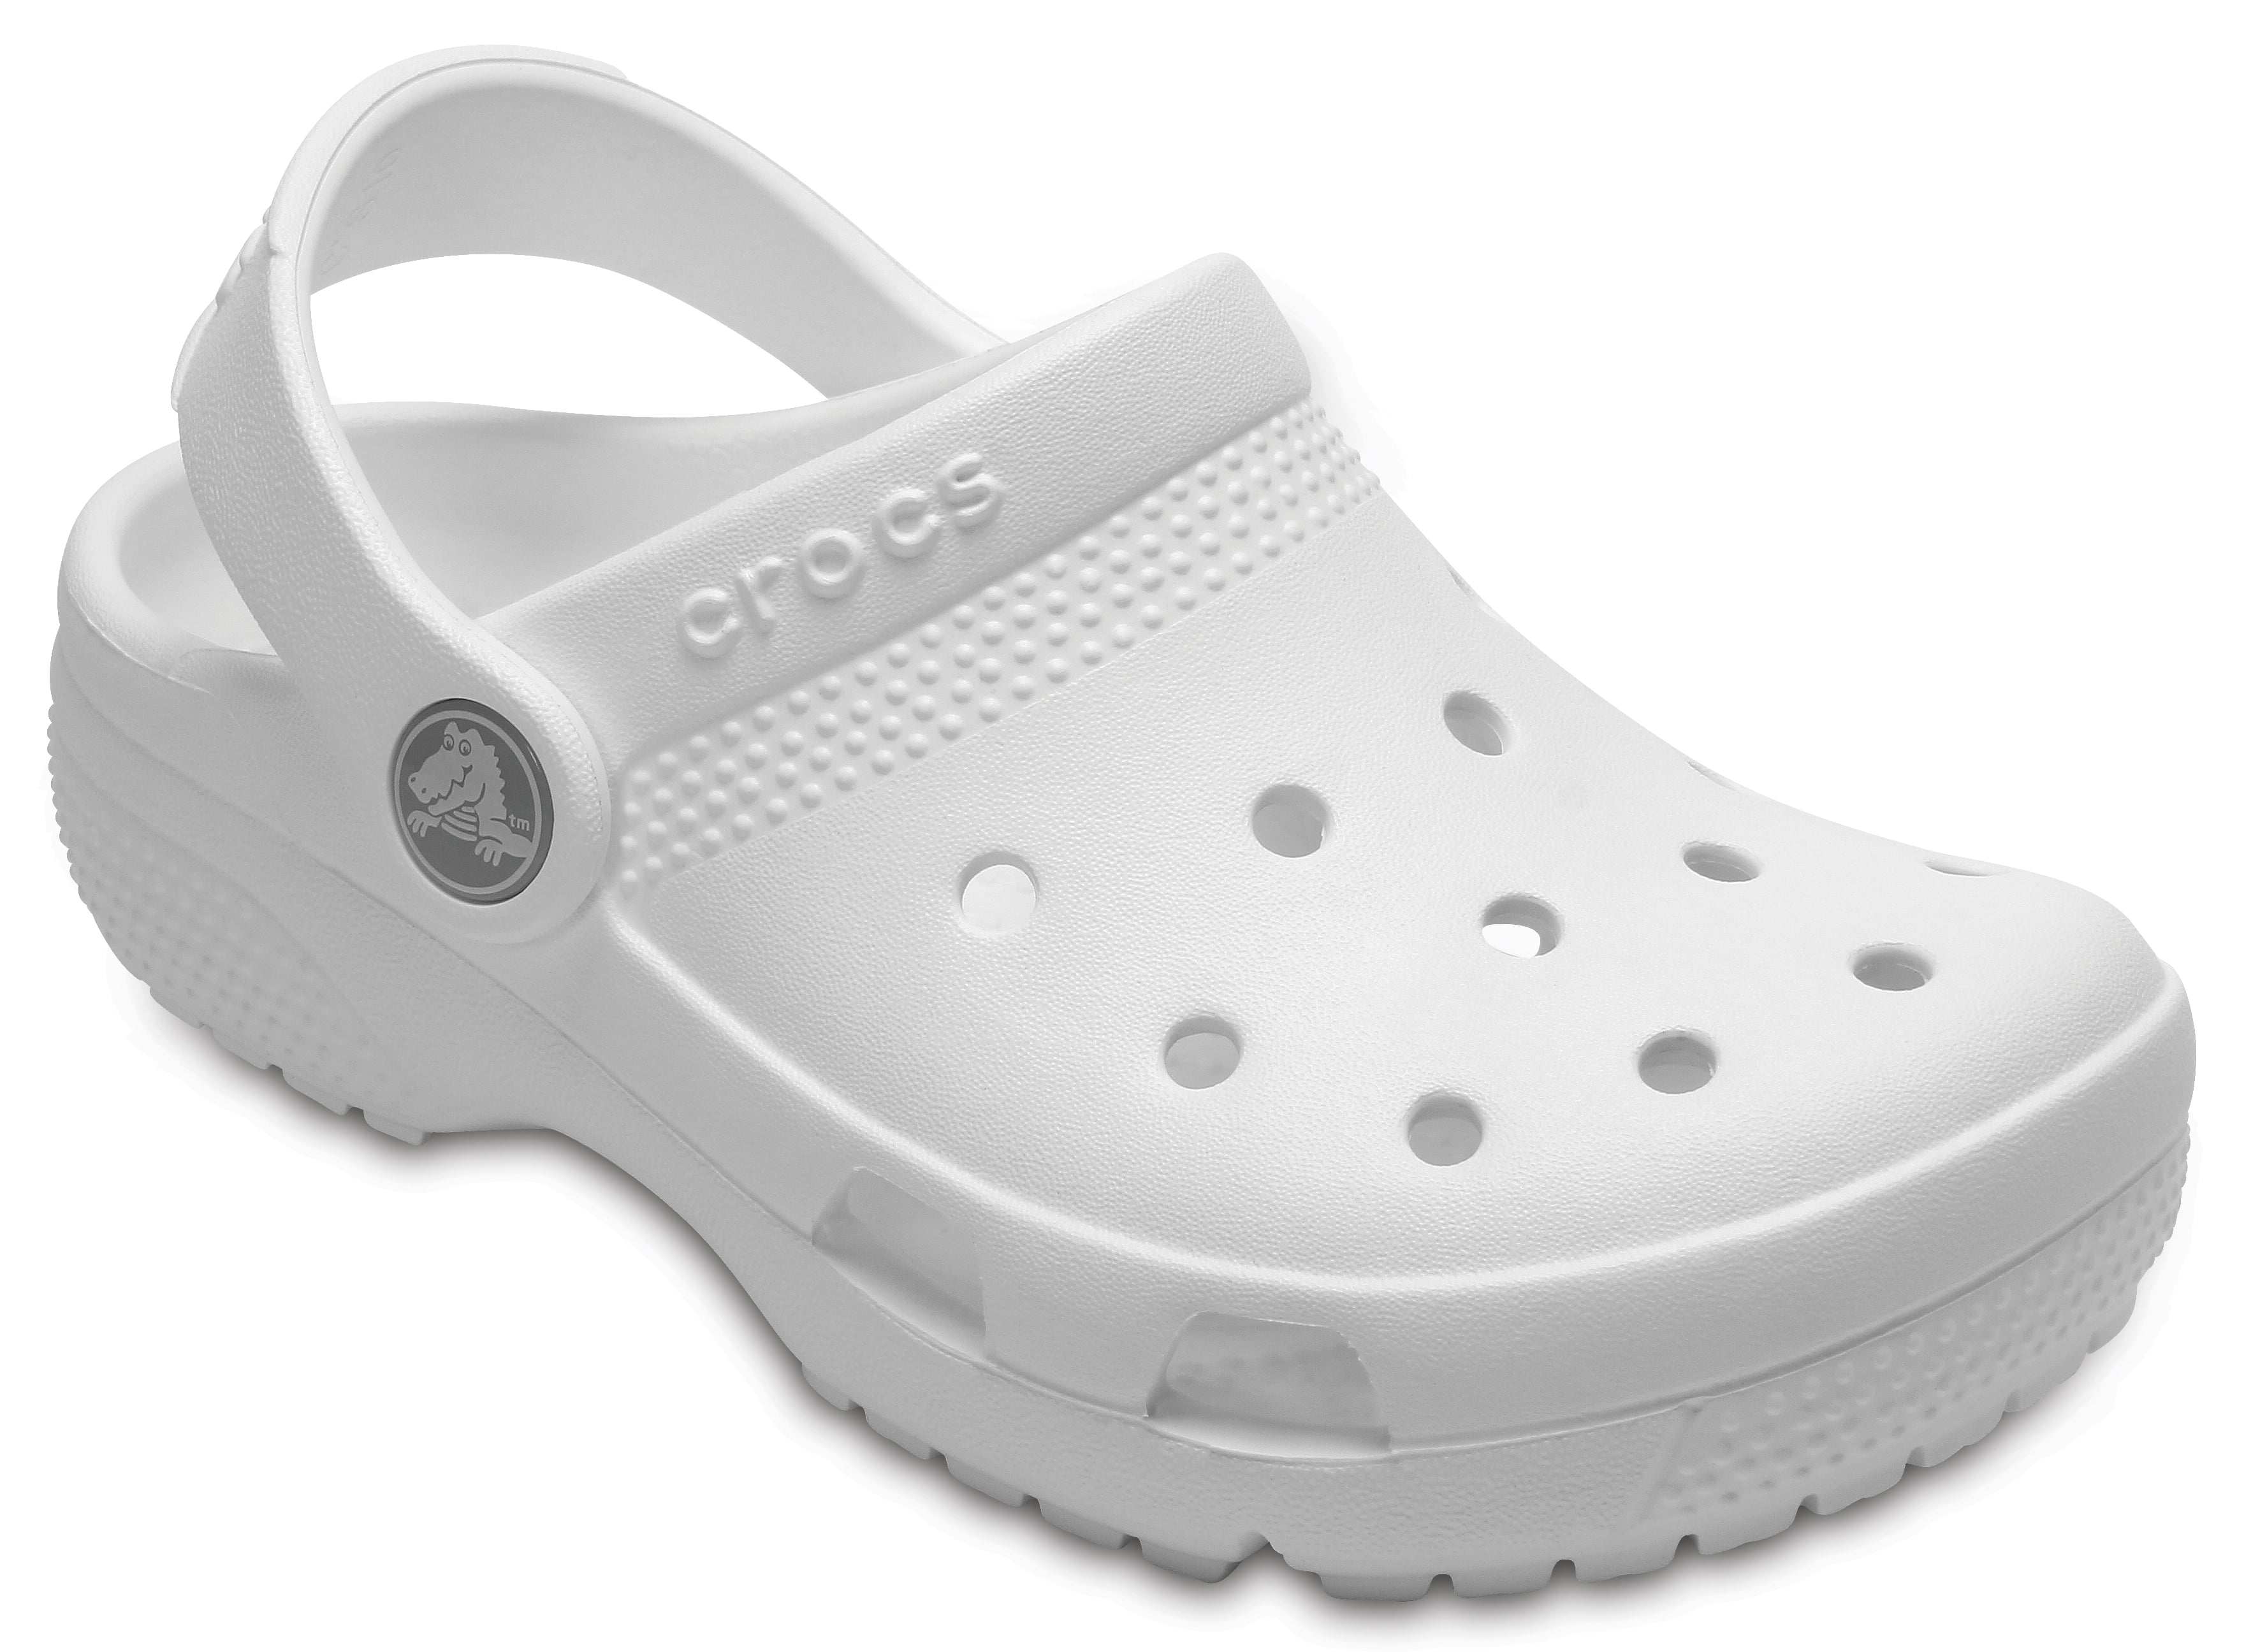 croc like shoes walmart